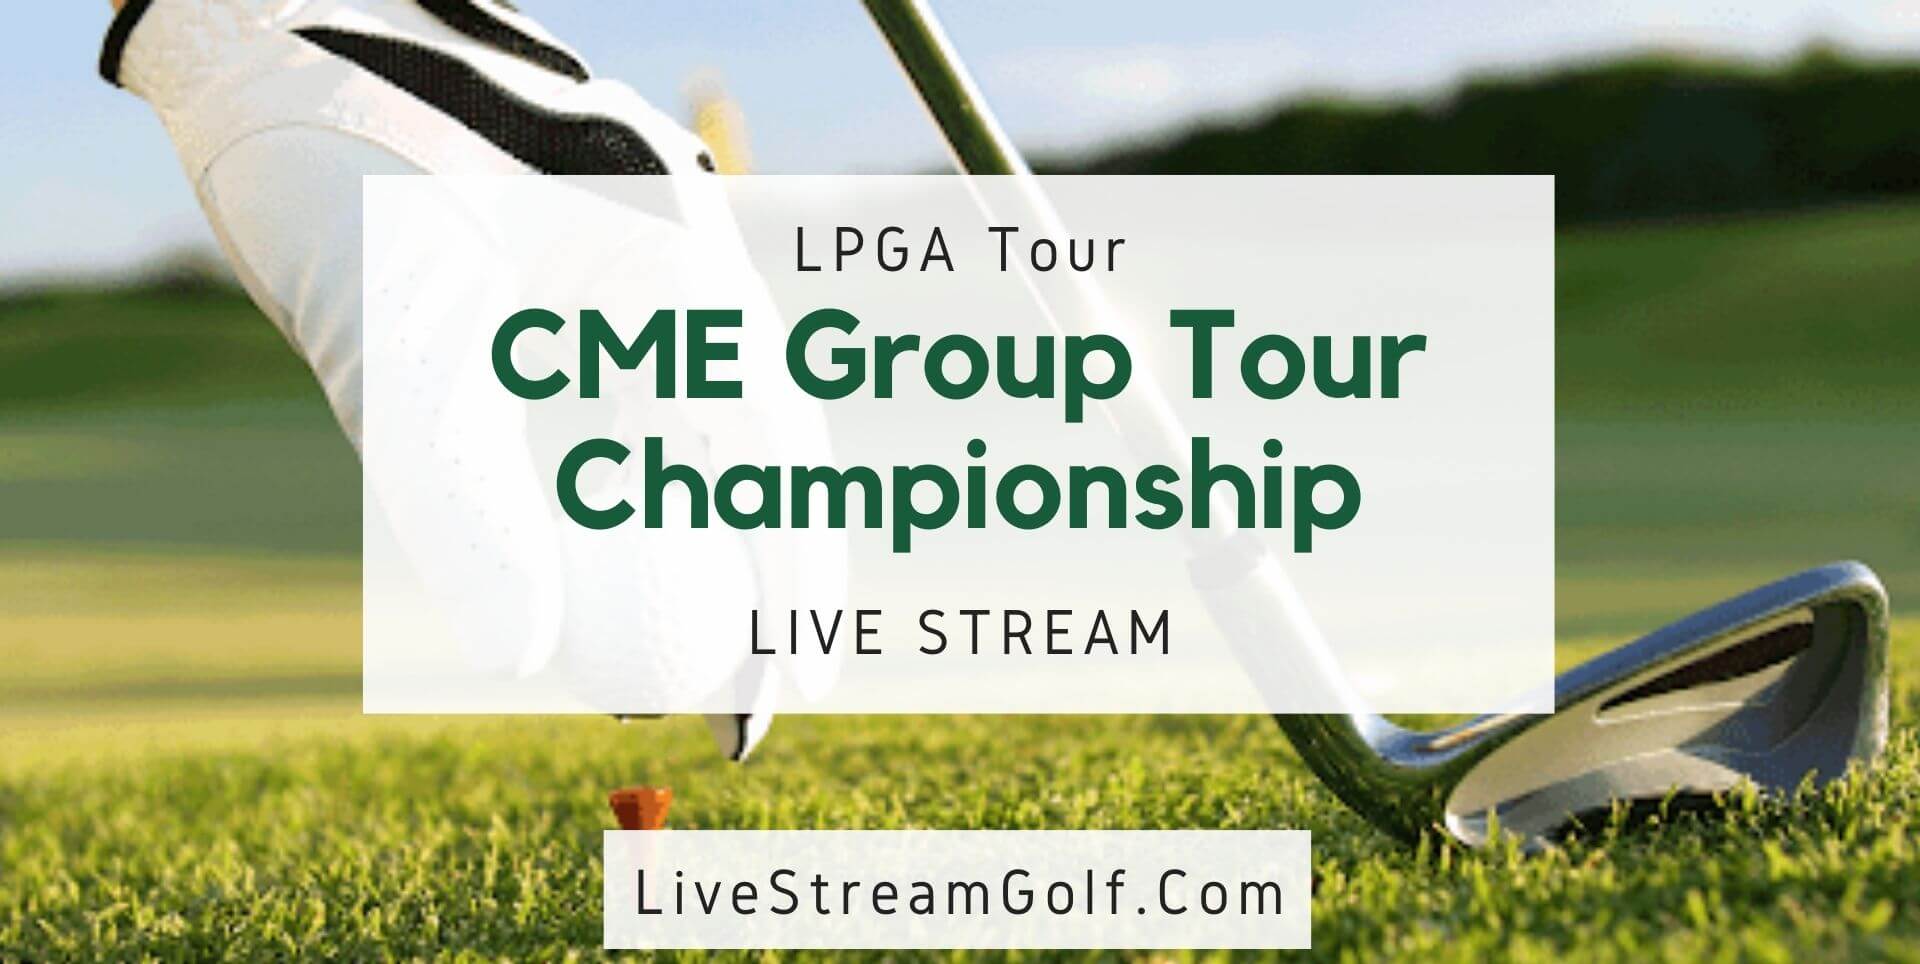 CME Group Tour Championship Day 1 Live Stream: LPGA Tour 2022